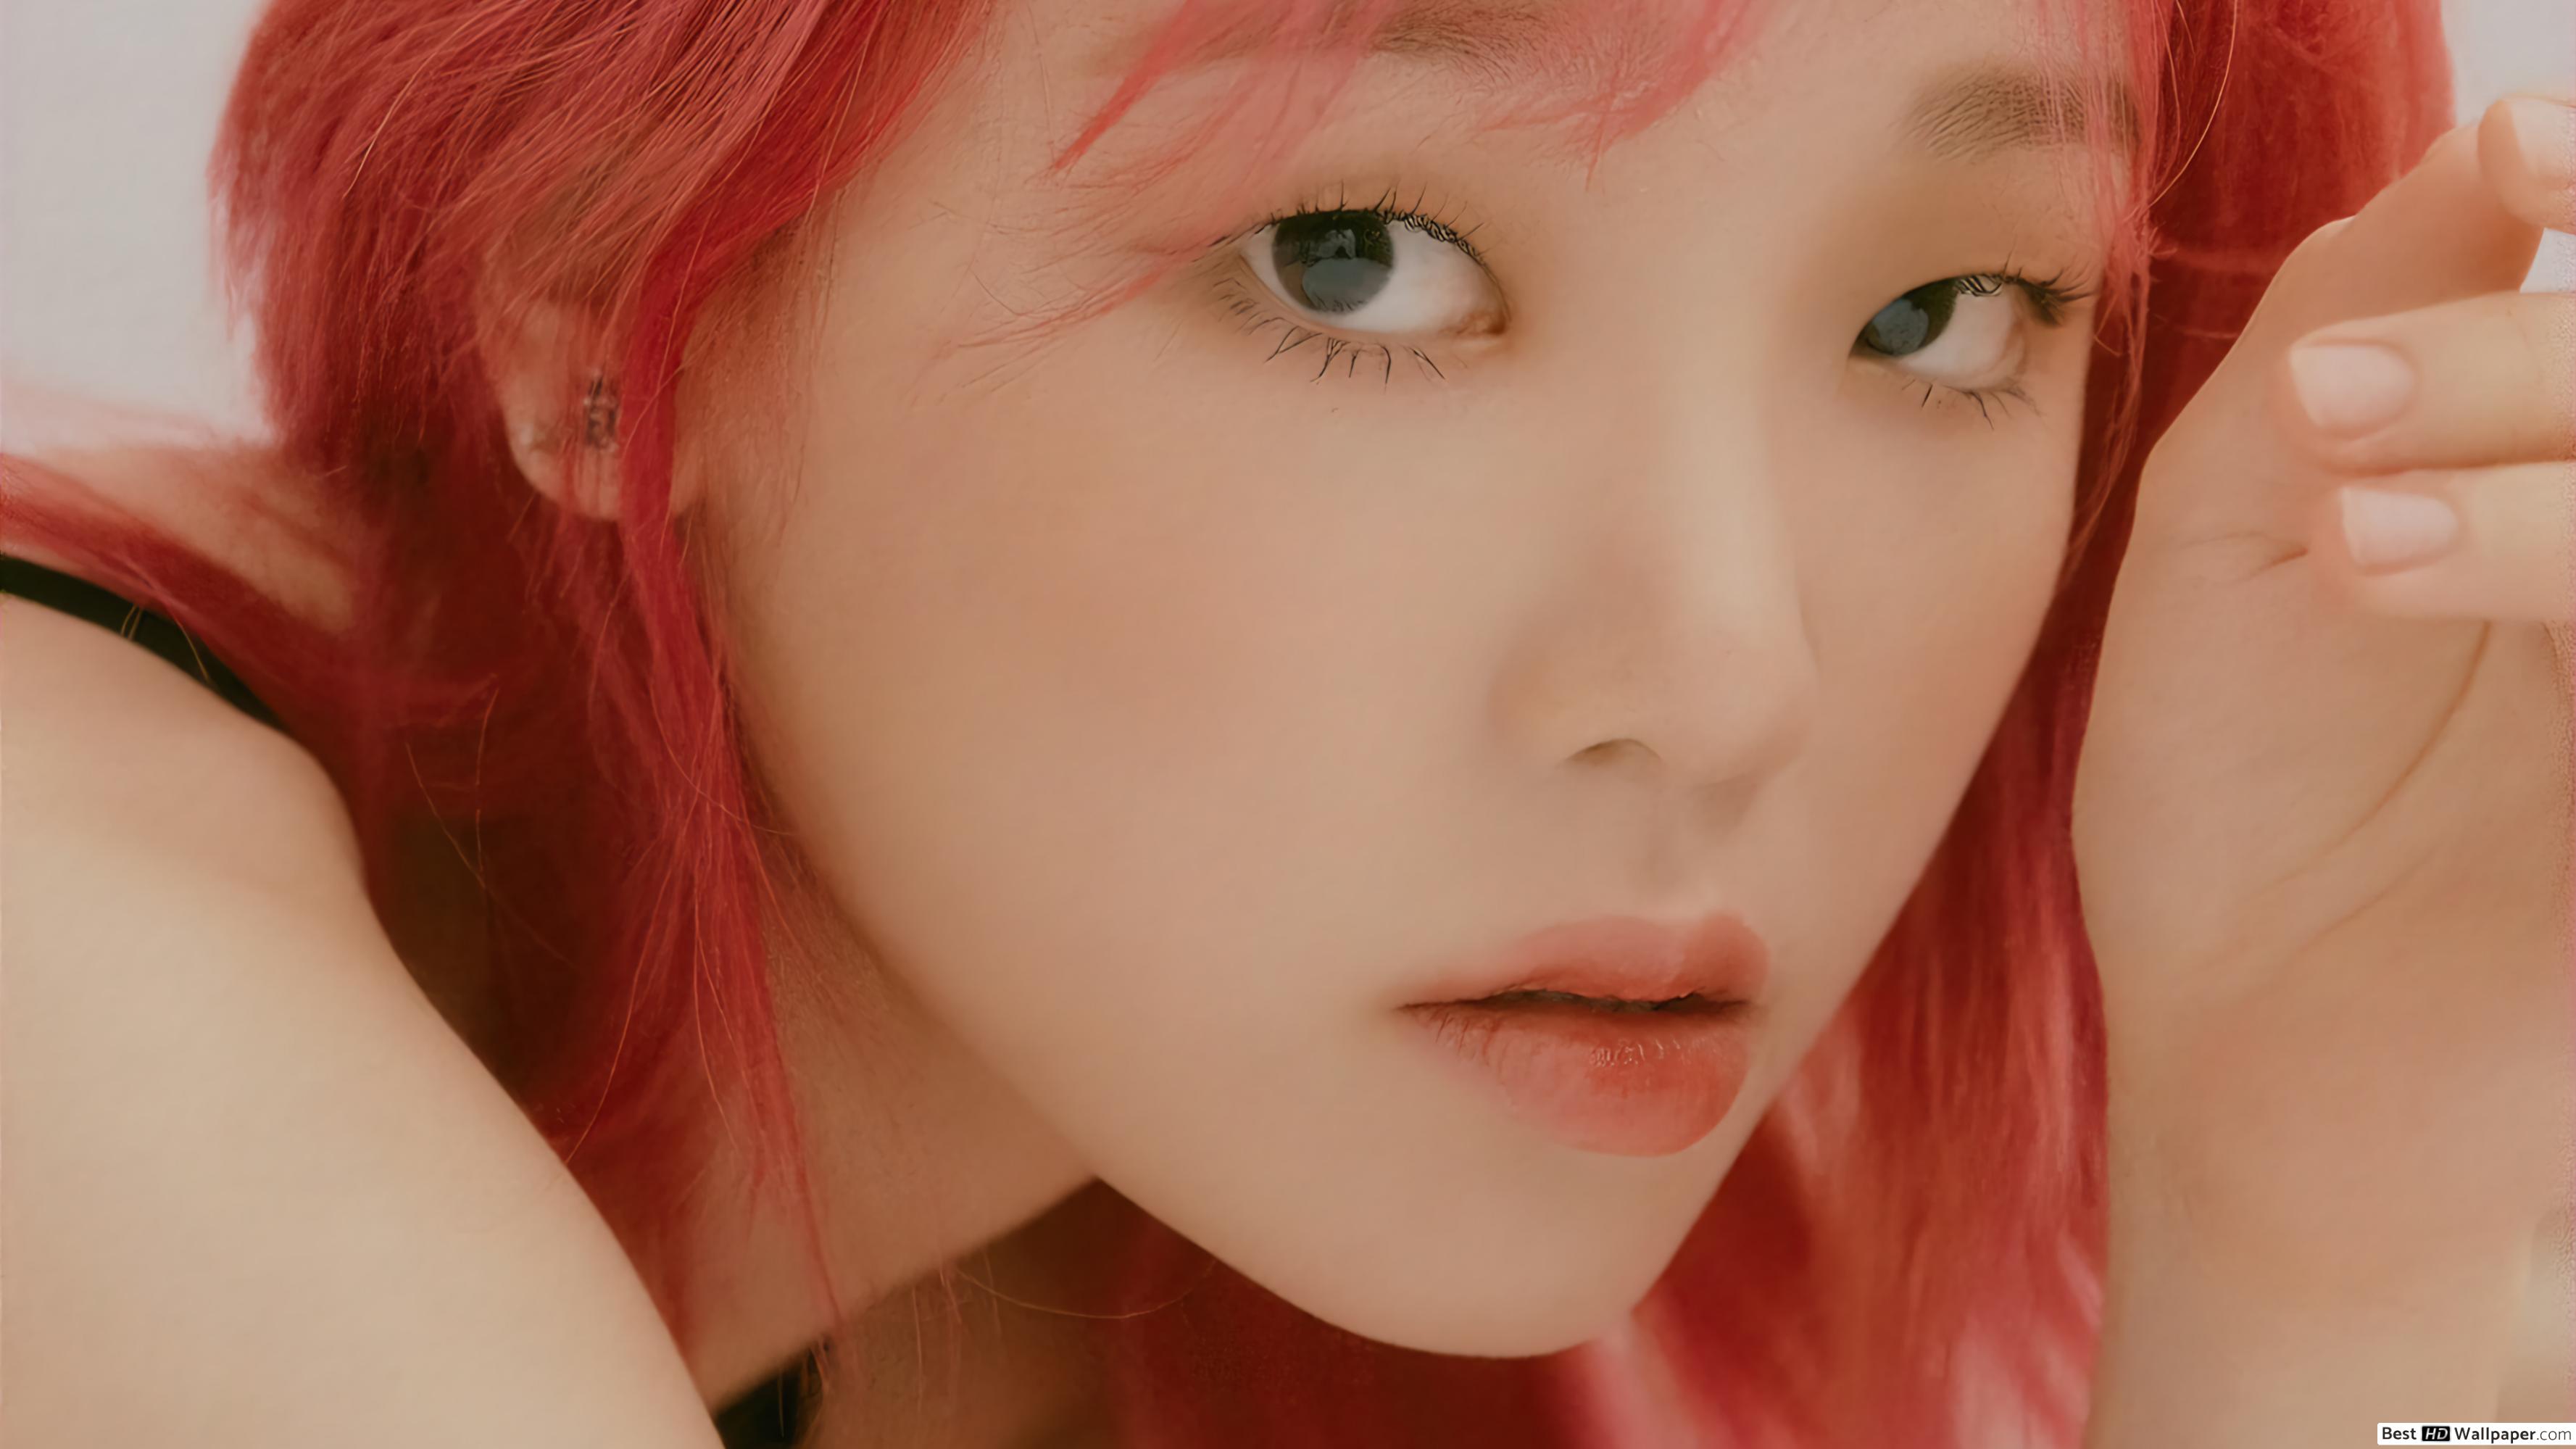 Seunghee In 'Dun Dun Dance' MV Shoot [2021] From 'Oh My Girl' (K Pop Band) HD Wallpaper Download